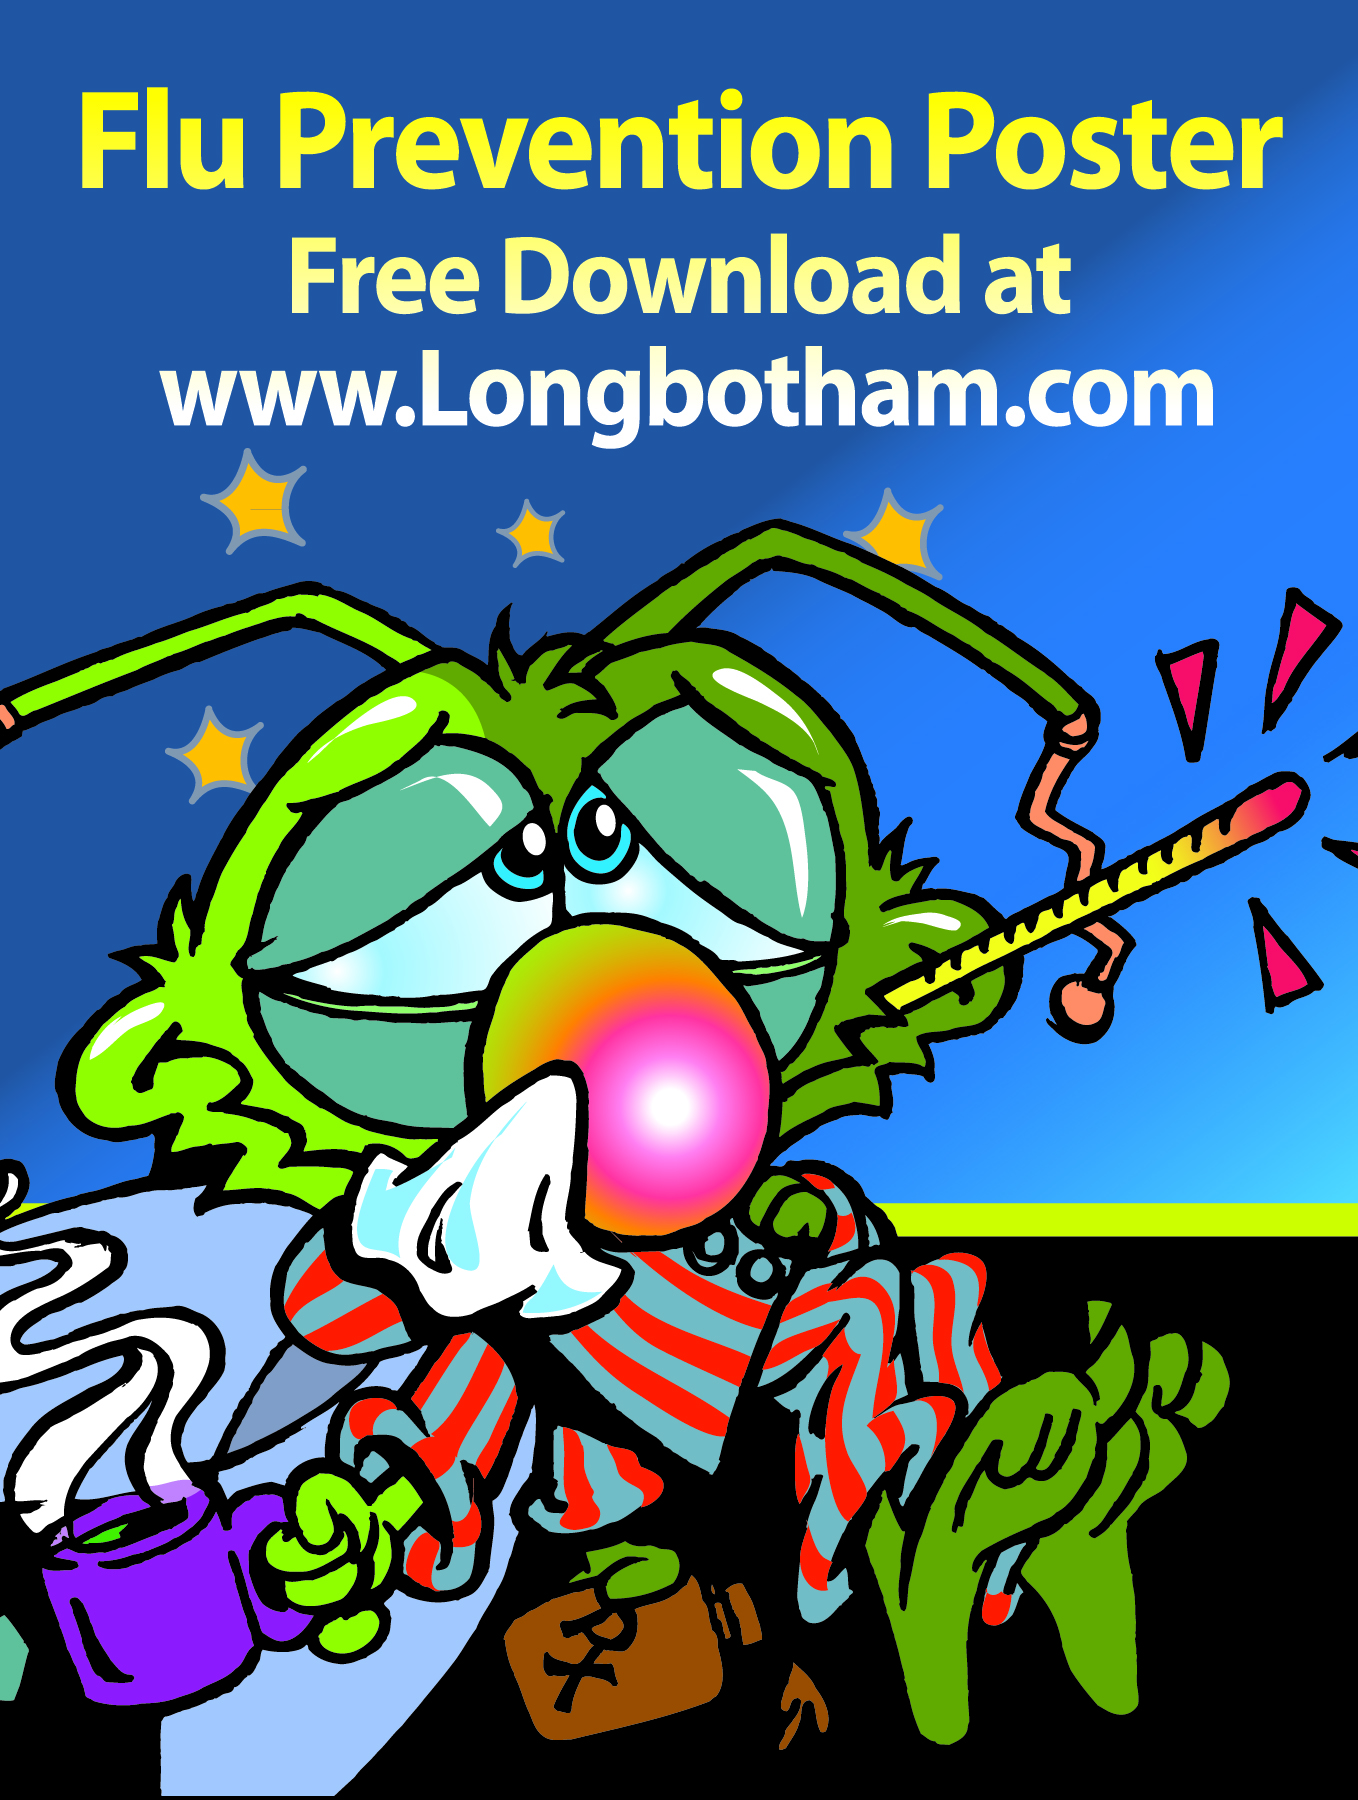 longbotham-strategic-marketing-offers-complimentary-flu-prevention